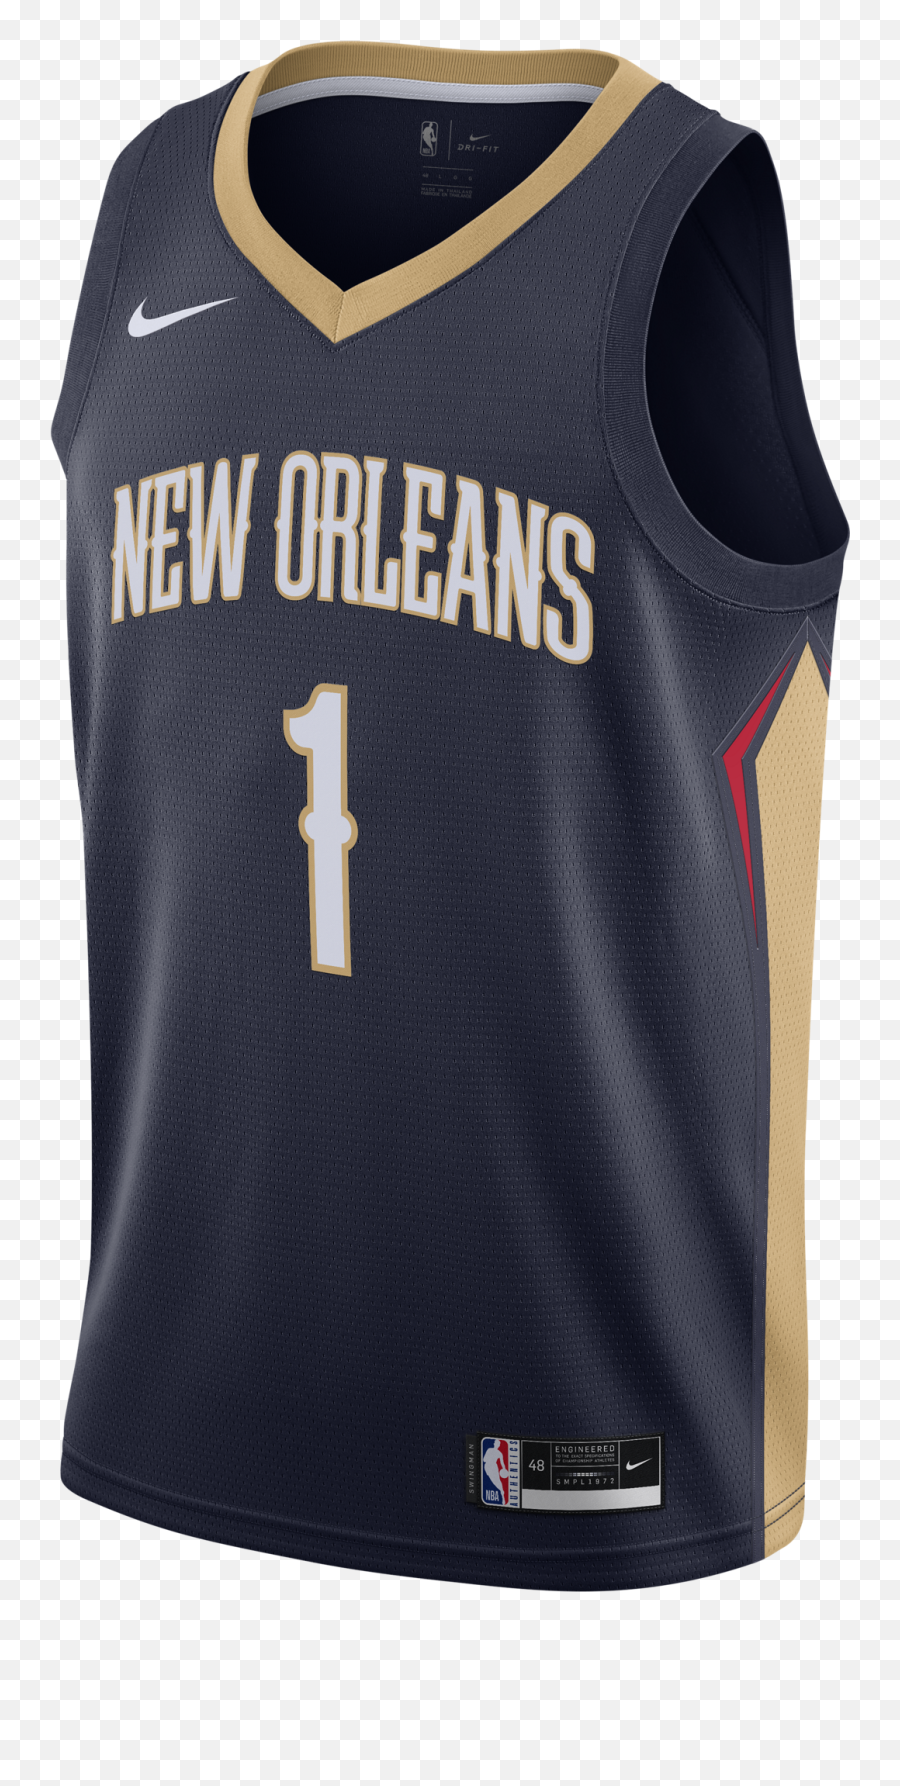 Nike Nba New Orleans Pelicans Icon Edition Swingman Jersey - New Orleans Pelicans Jersey Emoji,New Orlean Pelicans Logo